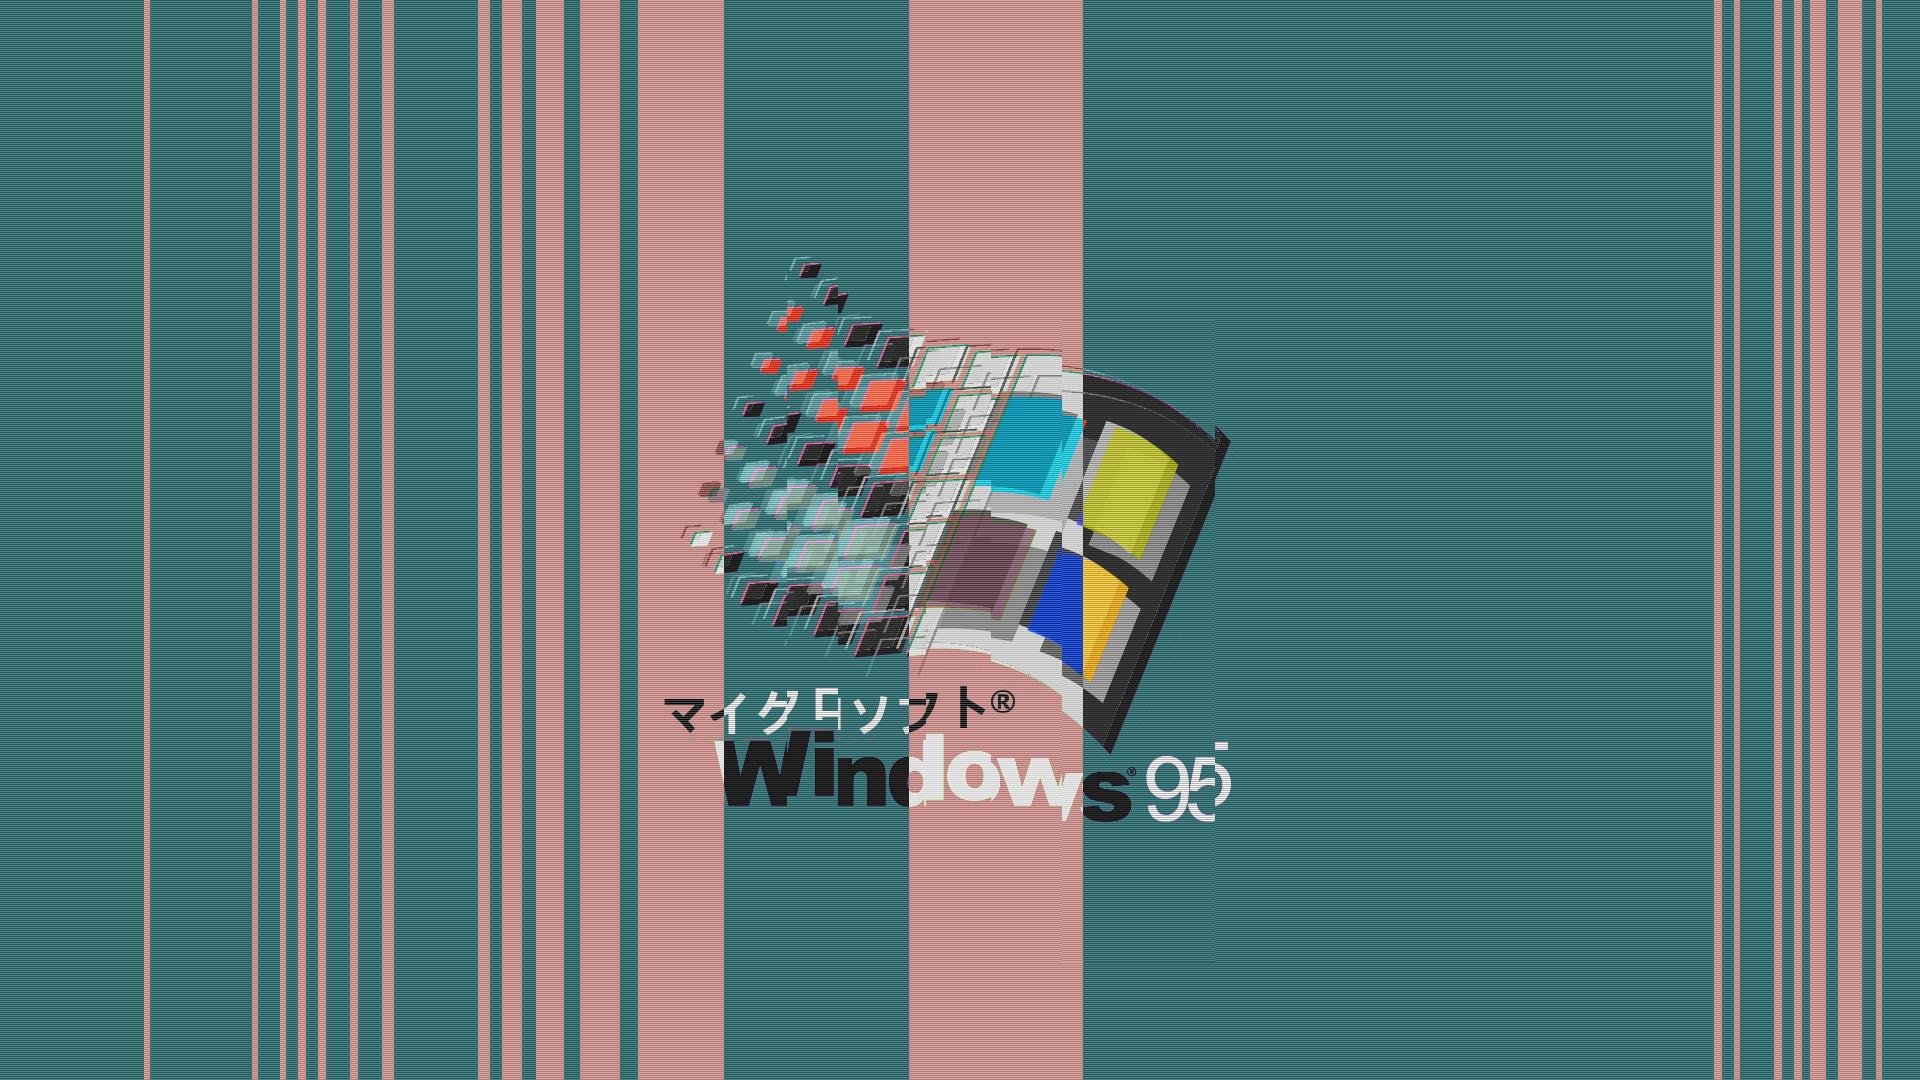 Windows 95 Aesthetic Wallpaper Free Windows 95 Aesthetic Background